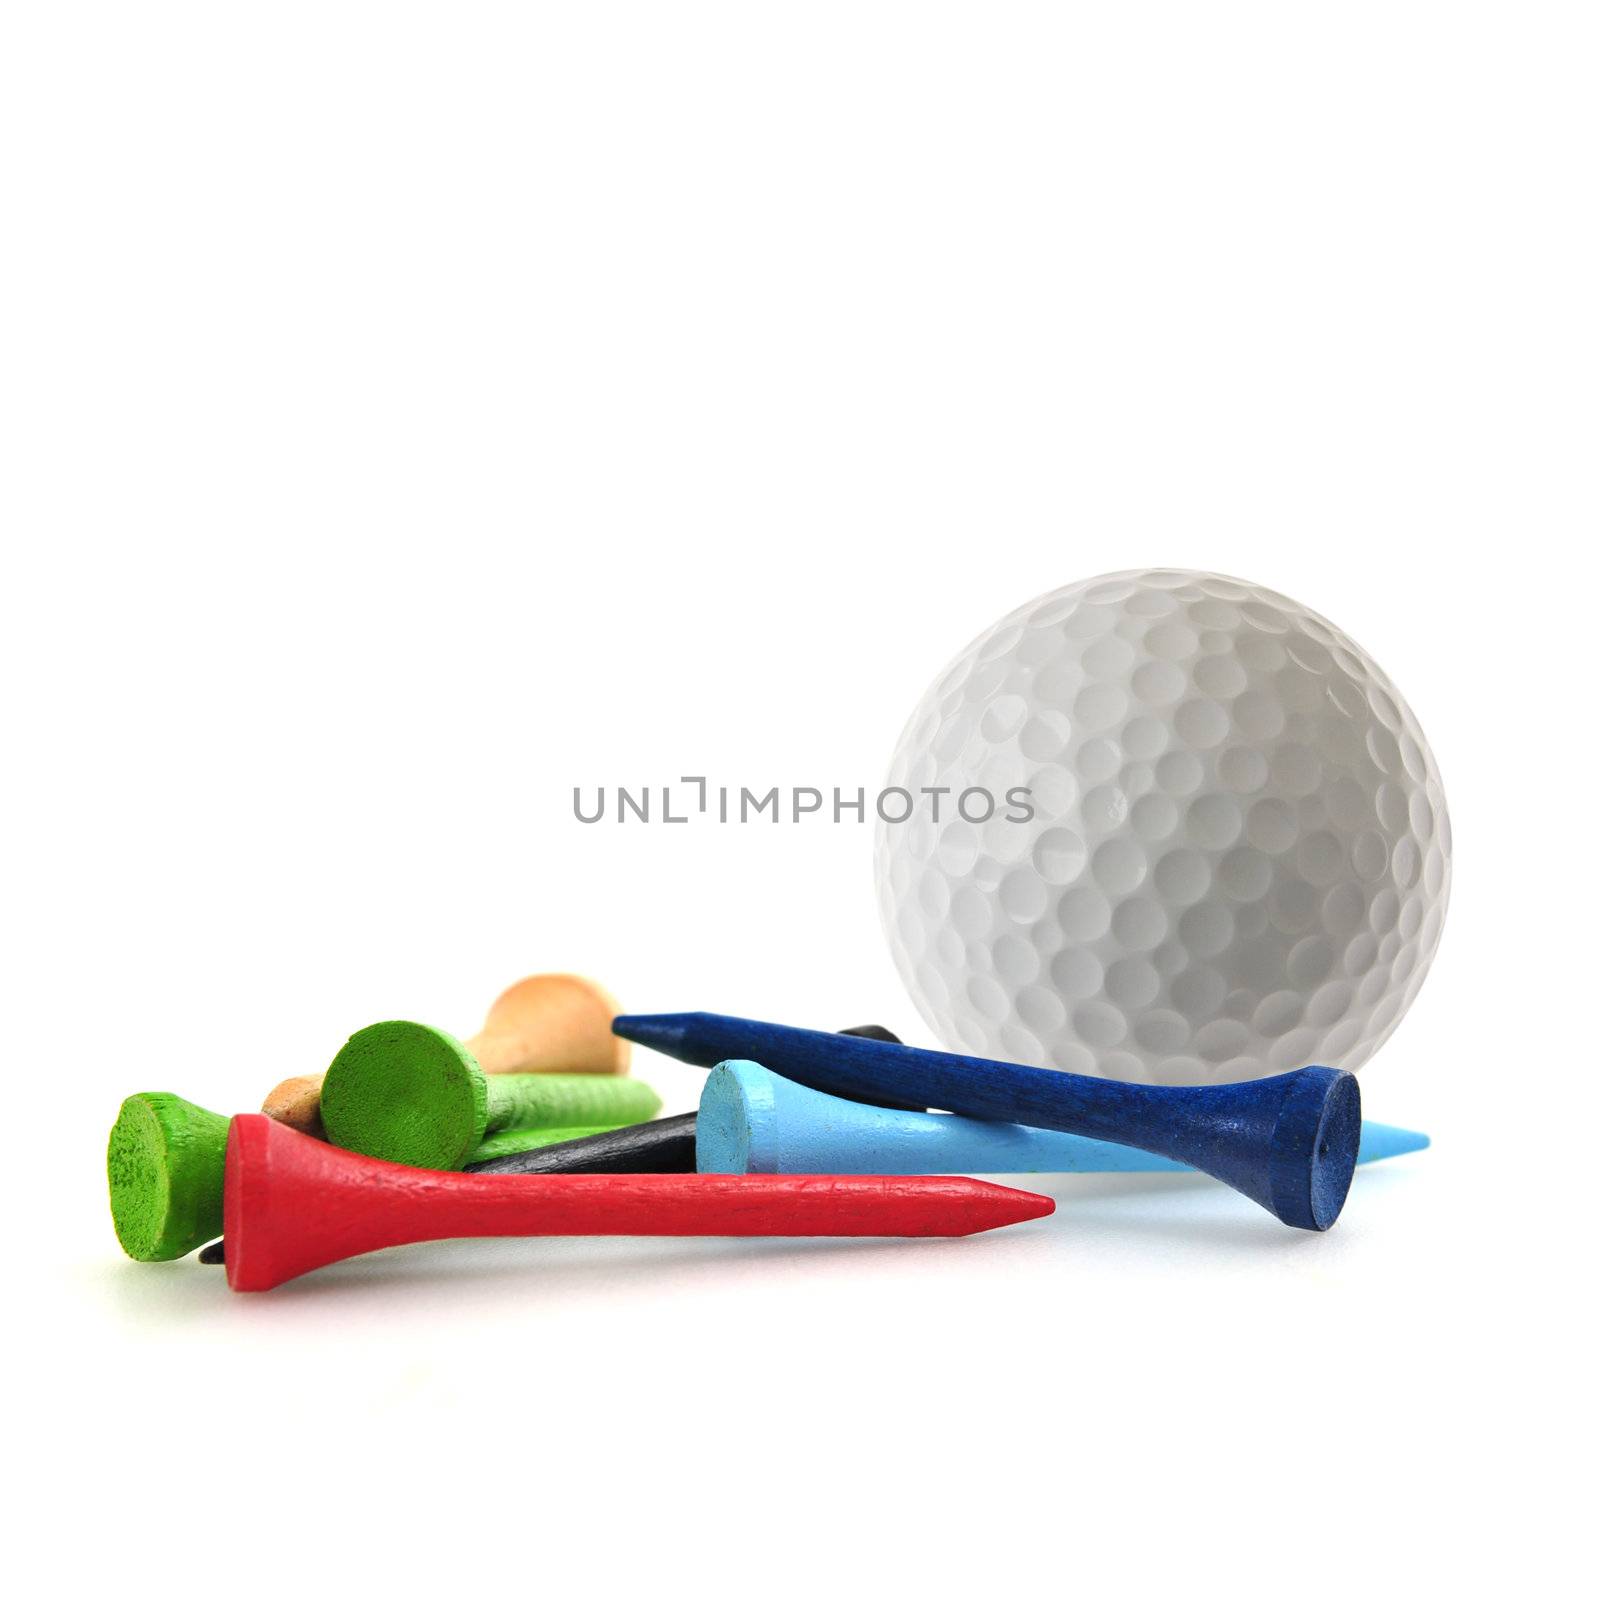 Golf ball and tees